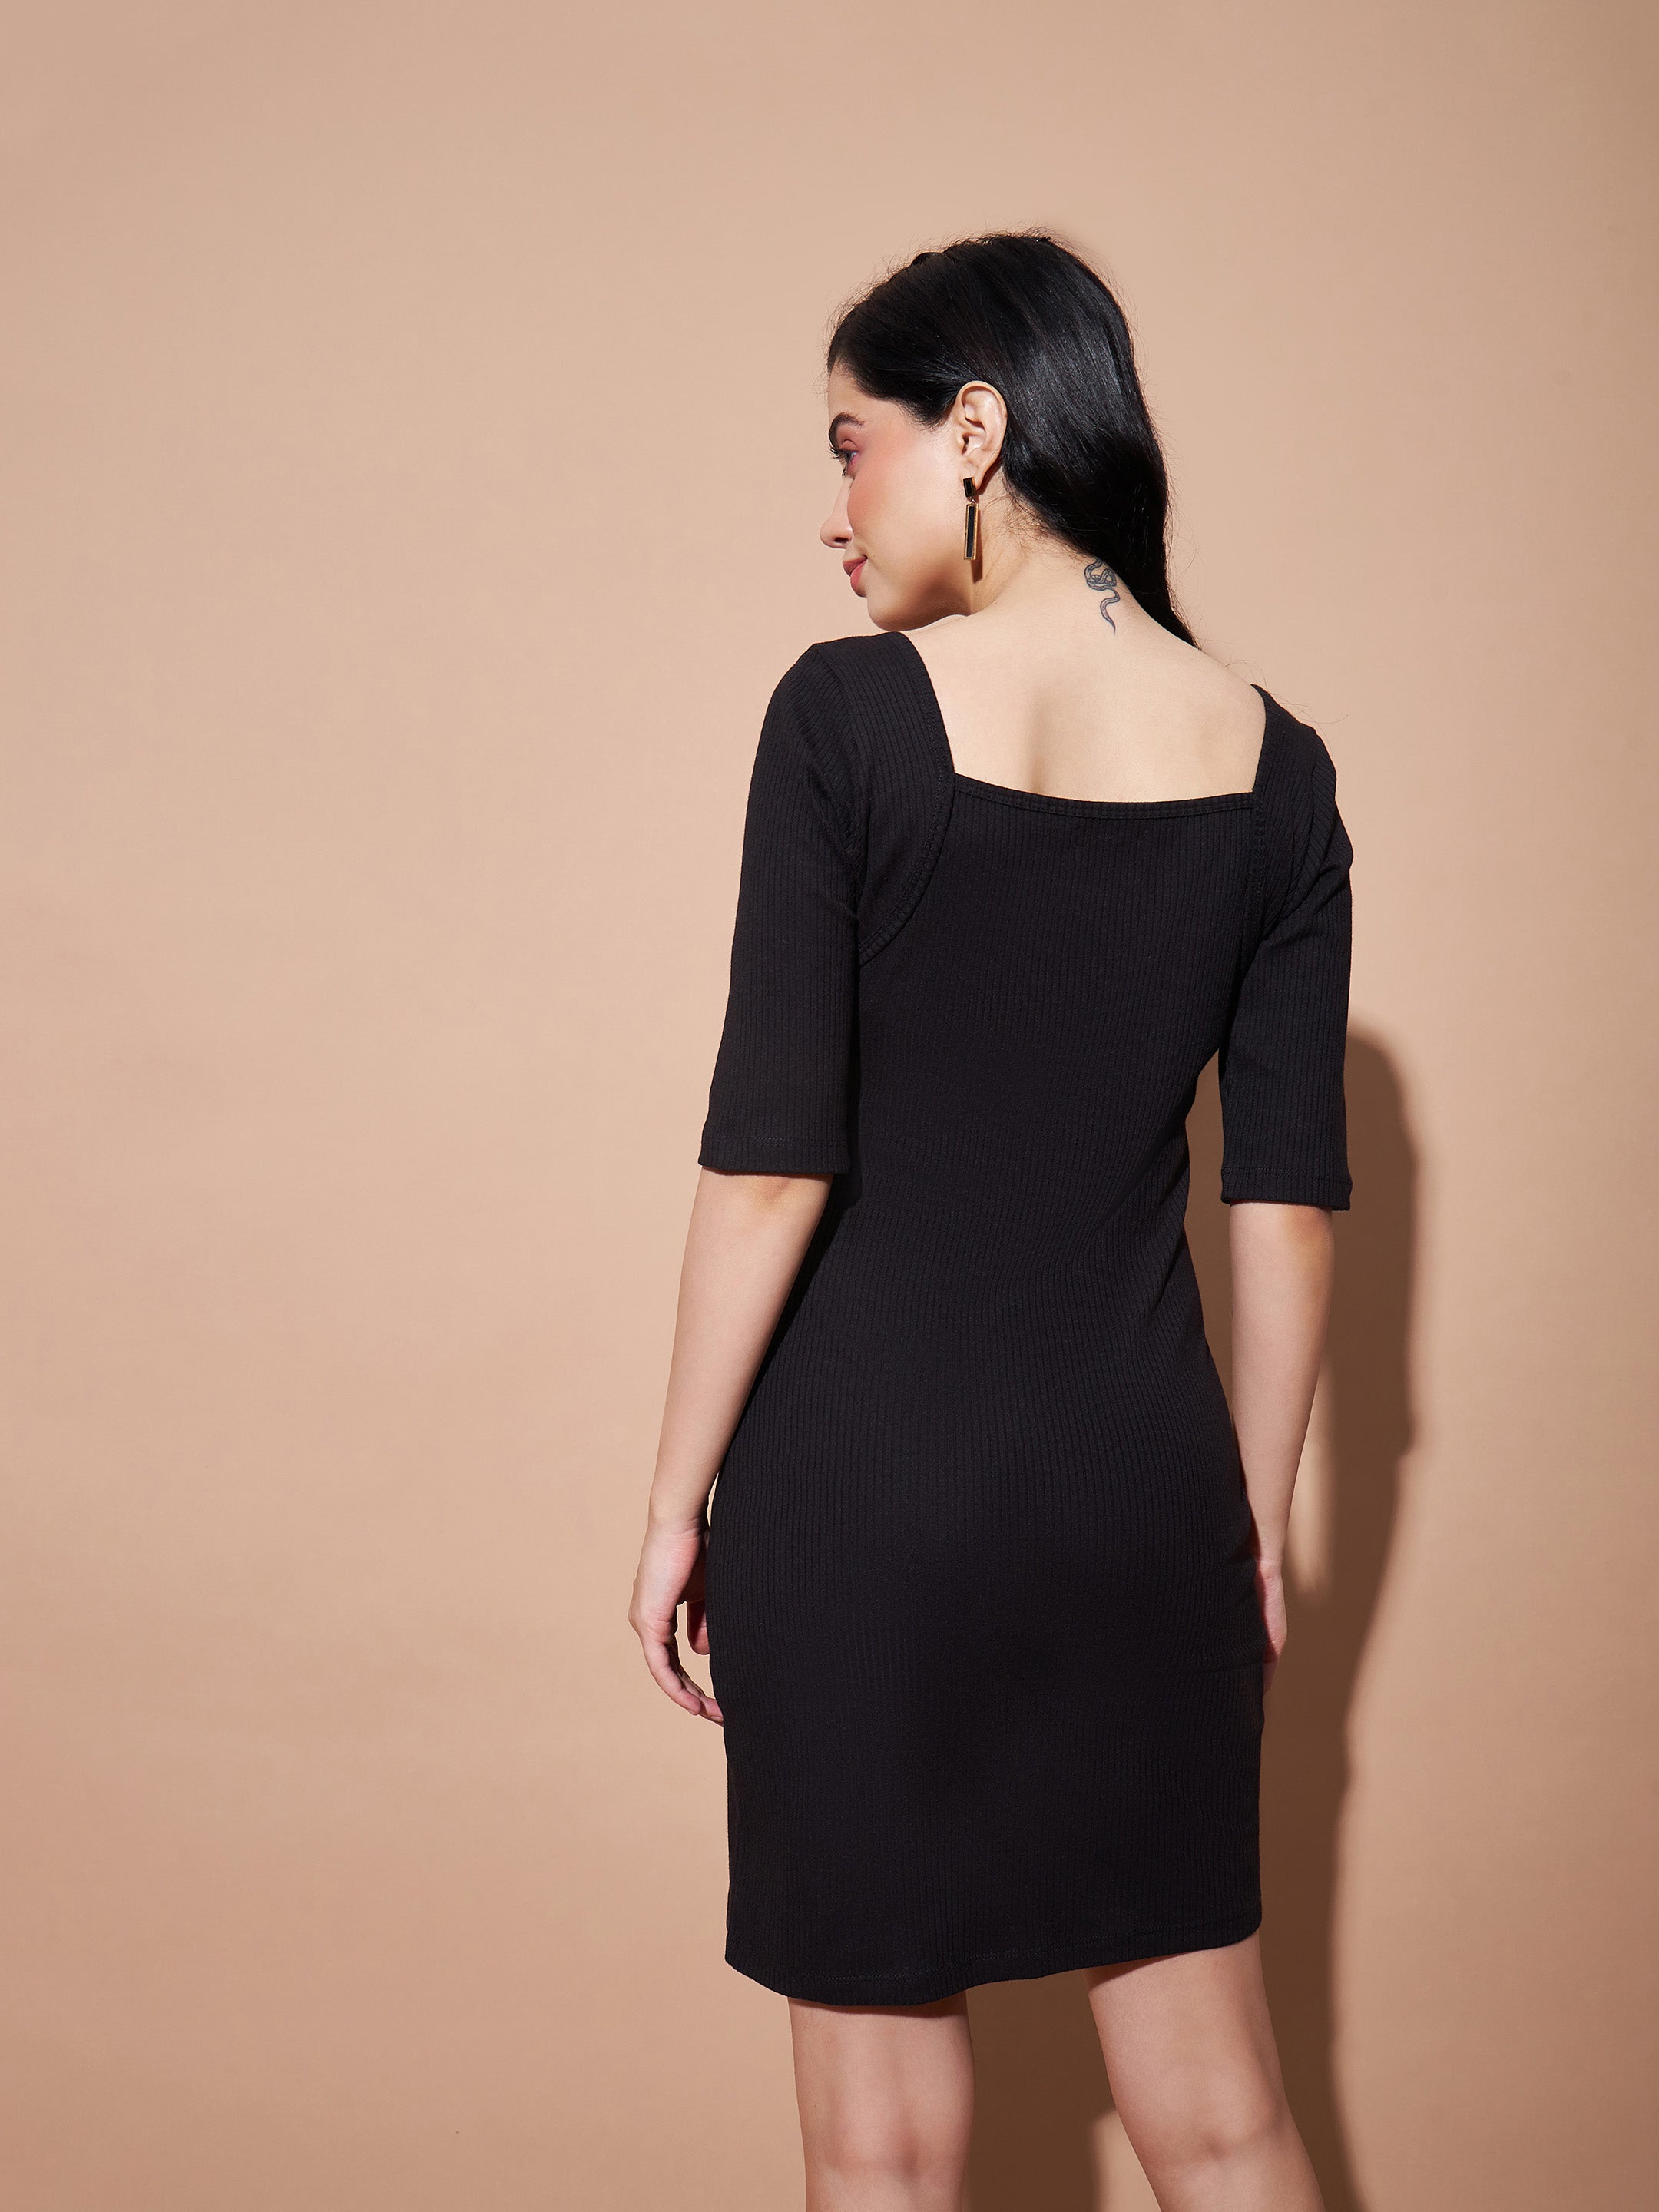 Women's Black Rib Square Neck Short Dress - Lyush